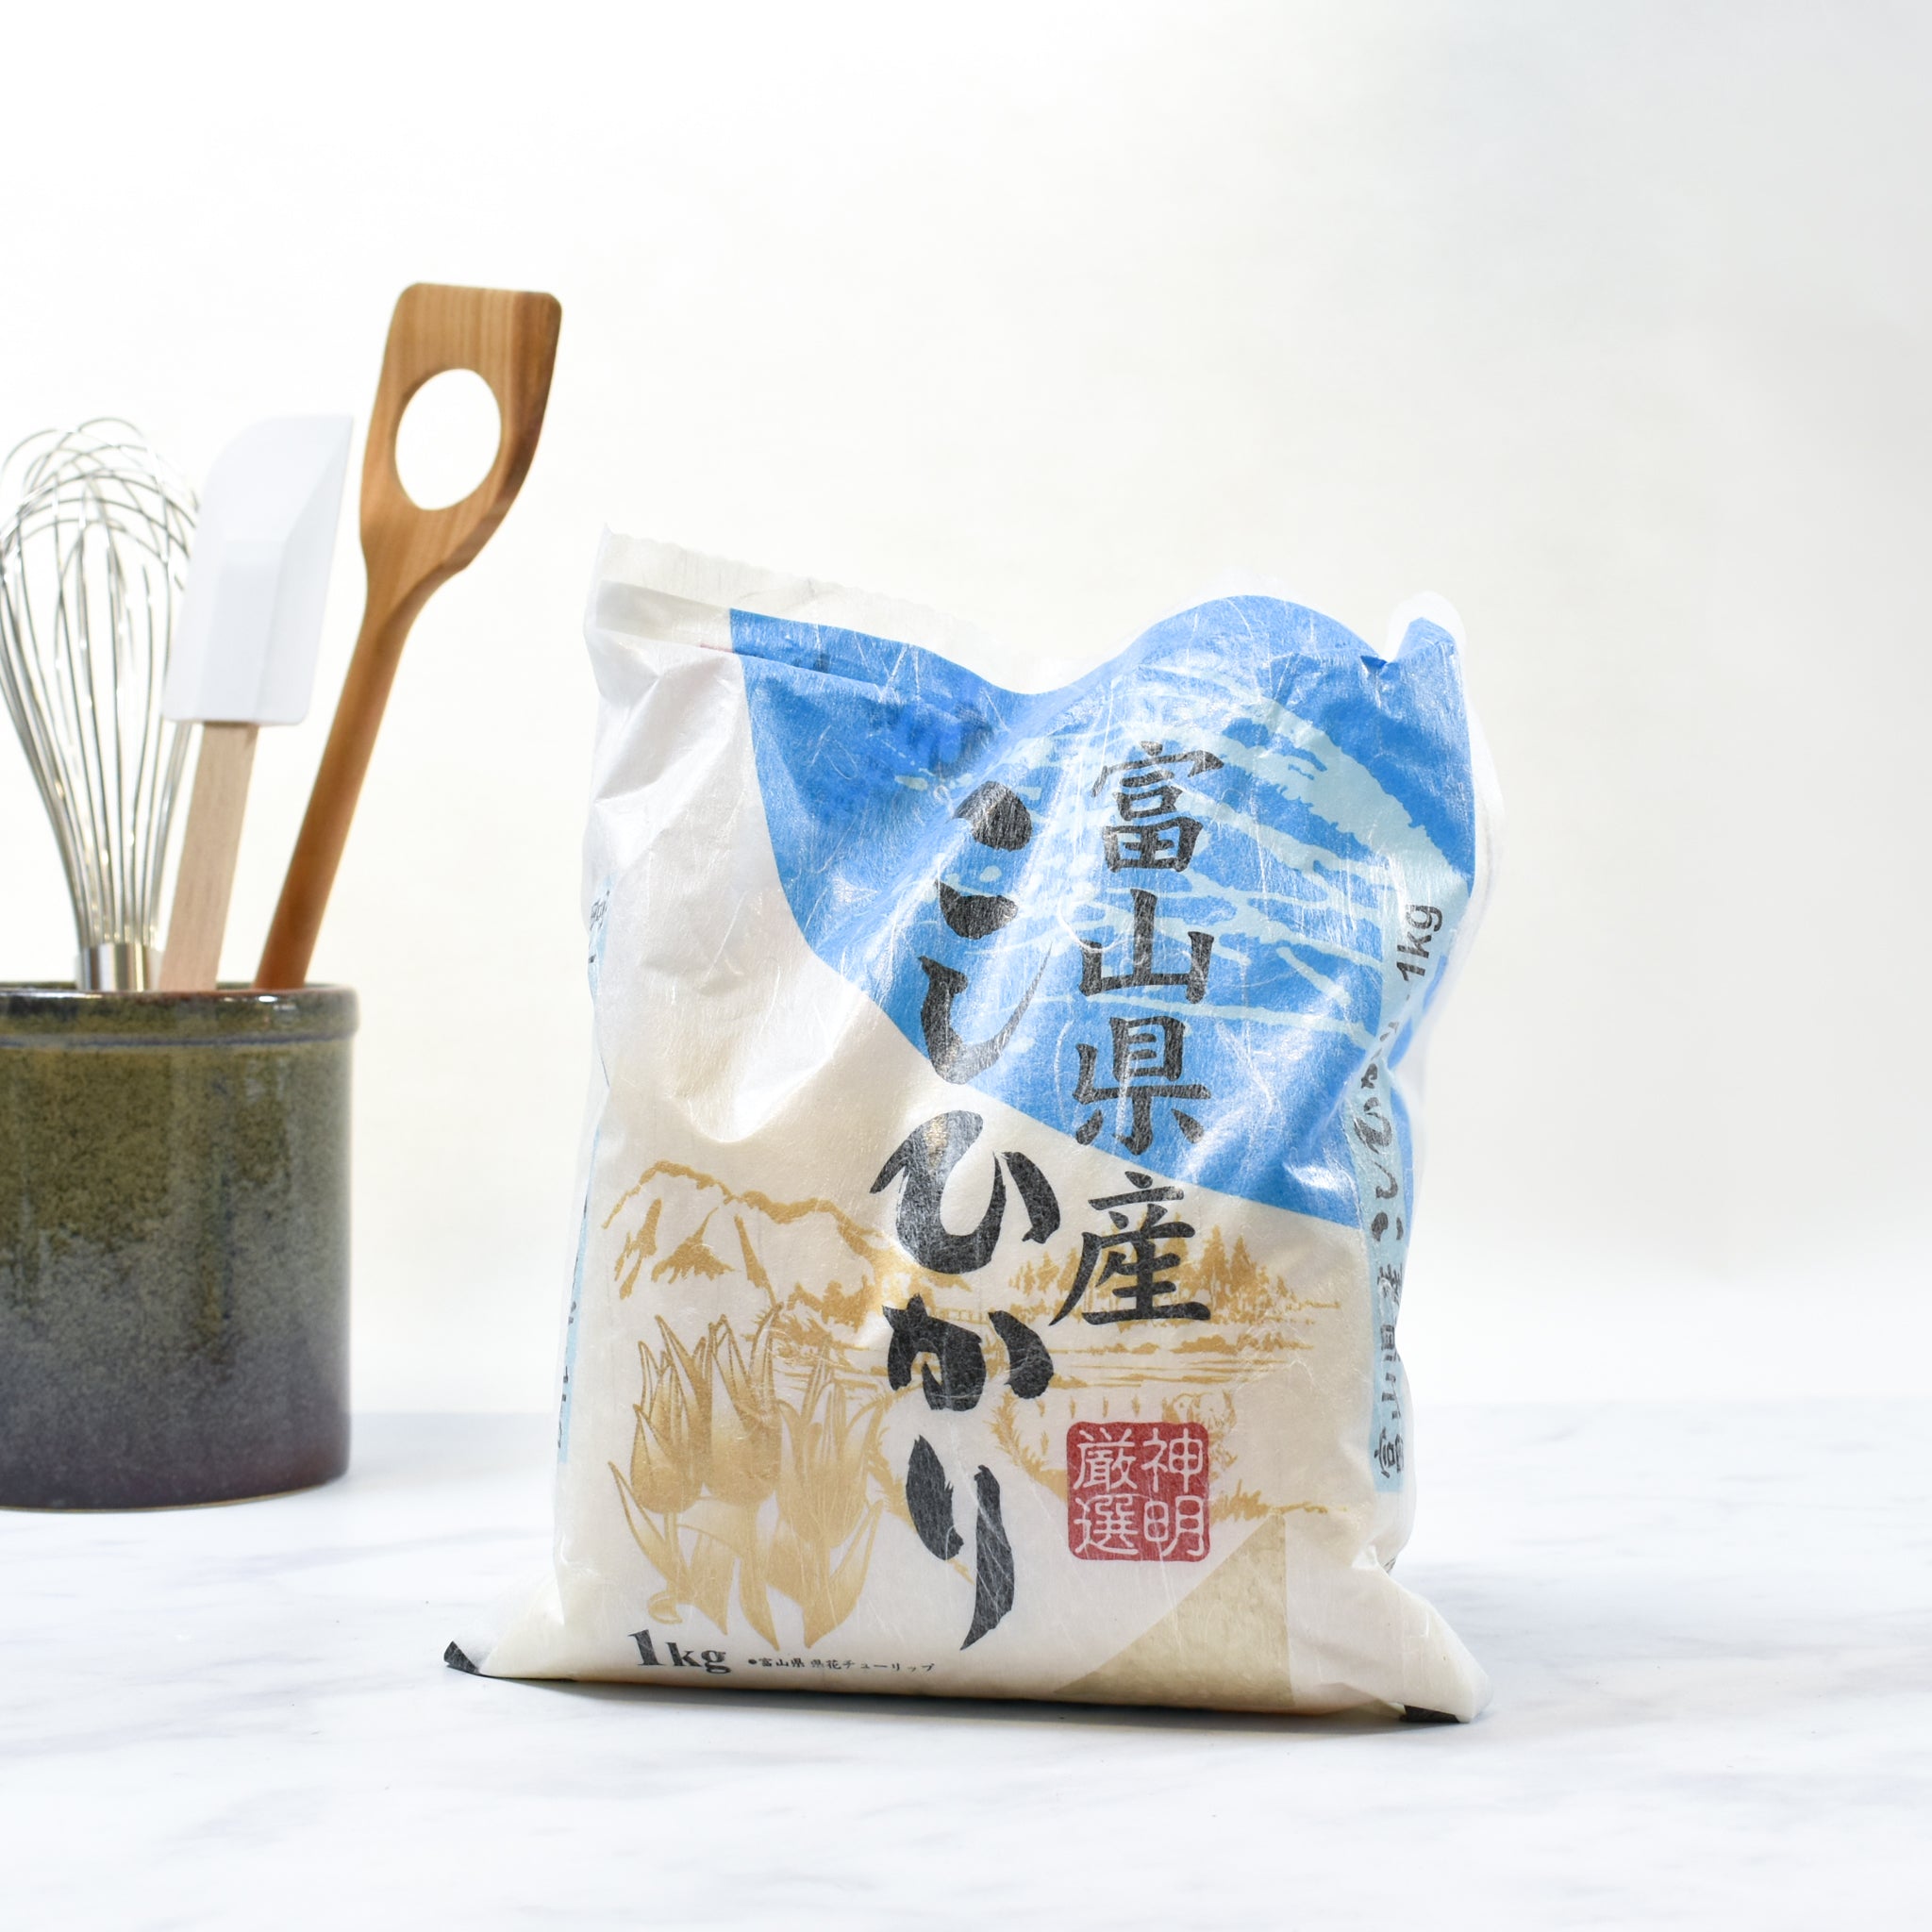 Toyama Koshihikari Japanese Grown Rice, 1kg